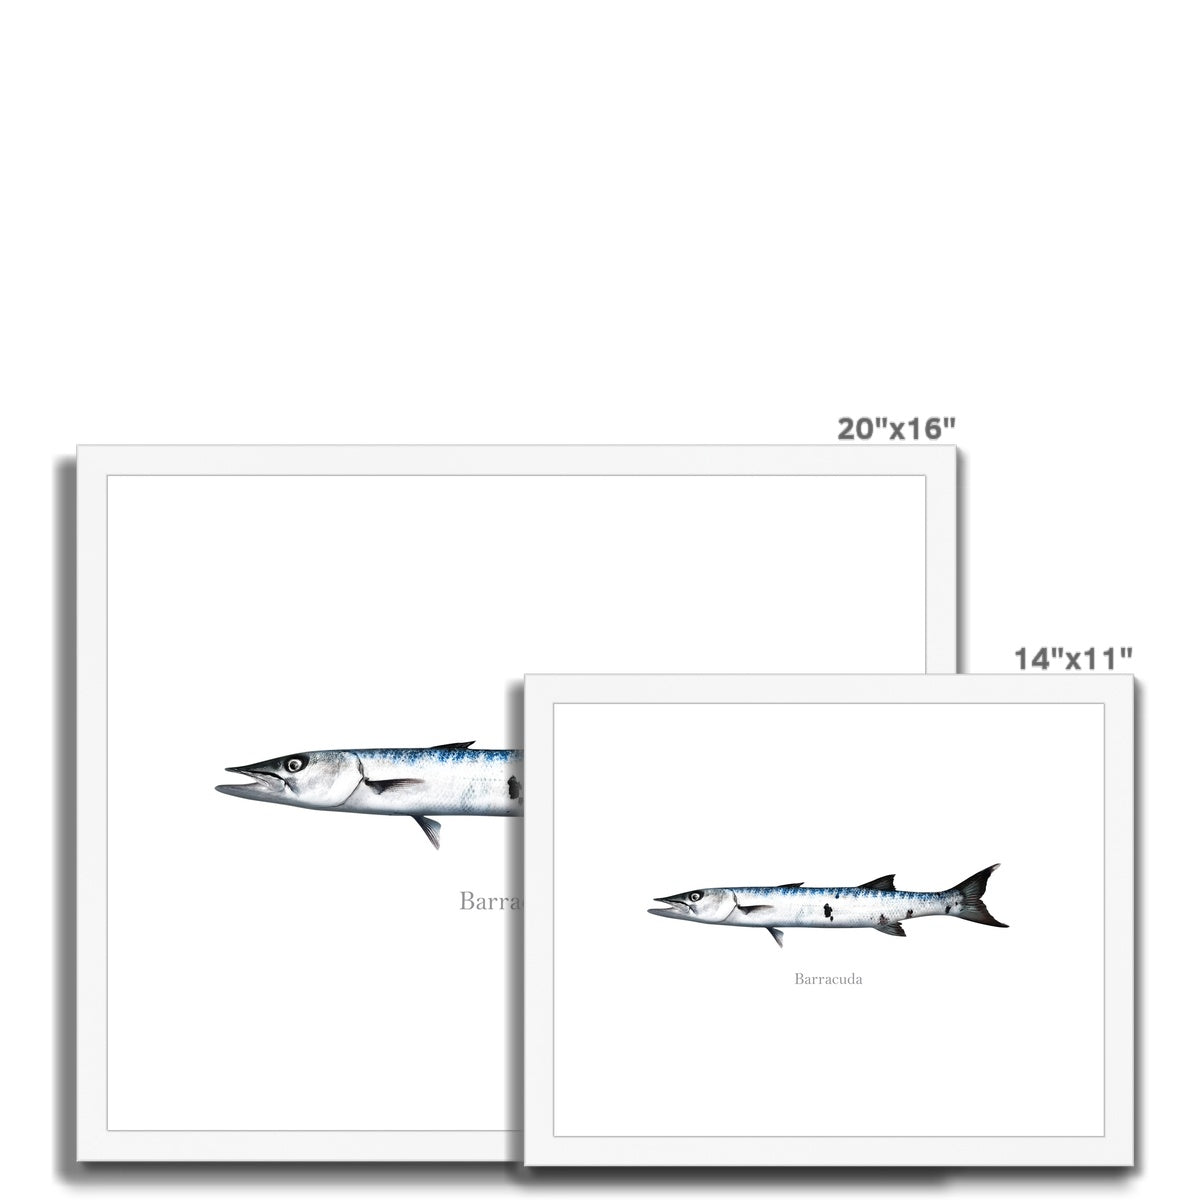 Barracuda - Framed & Mounted Print